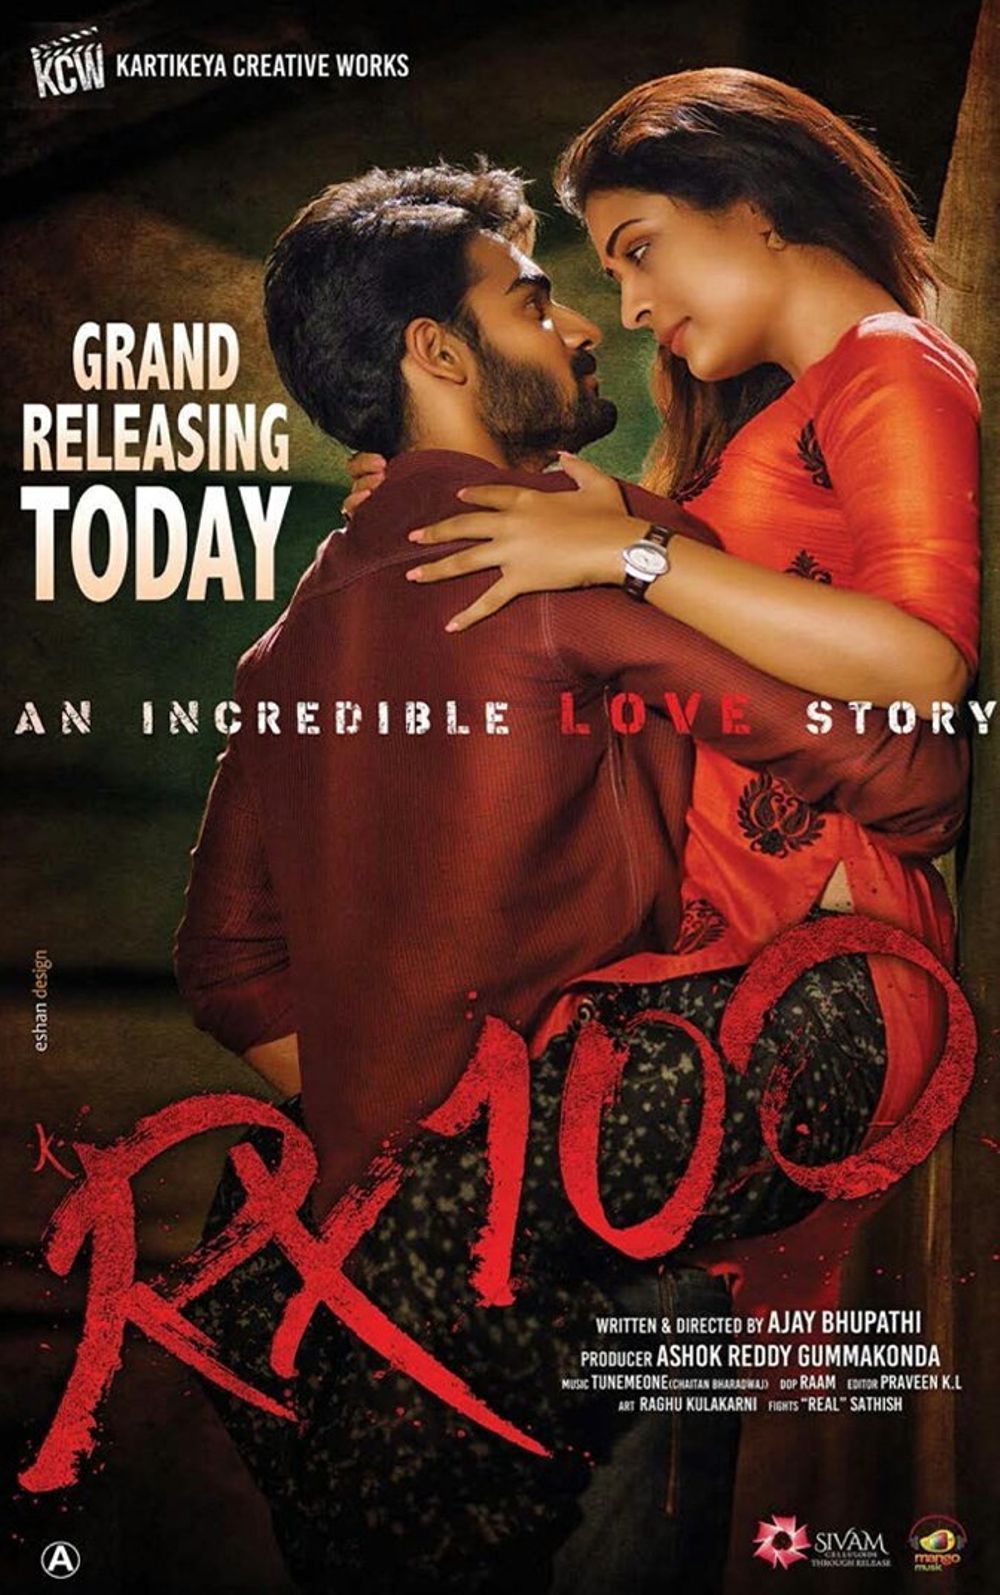 Watch Karthikeya and Payal Rajput telugu movie RX 100 online movie available.. #RX100 #fullmov. Telugu movies download, Telugu movies online, Full movies online